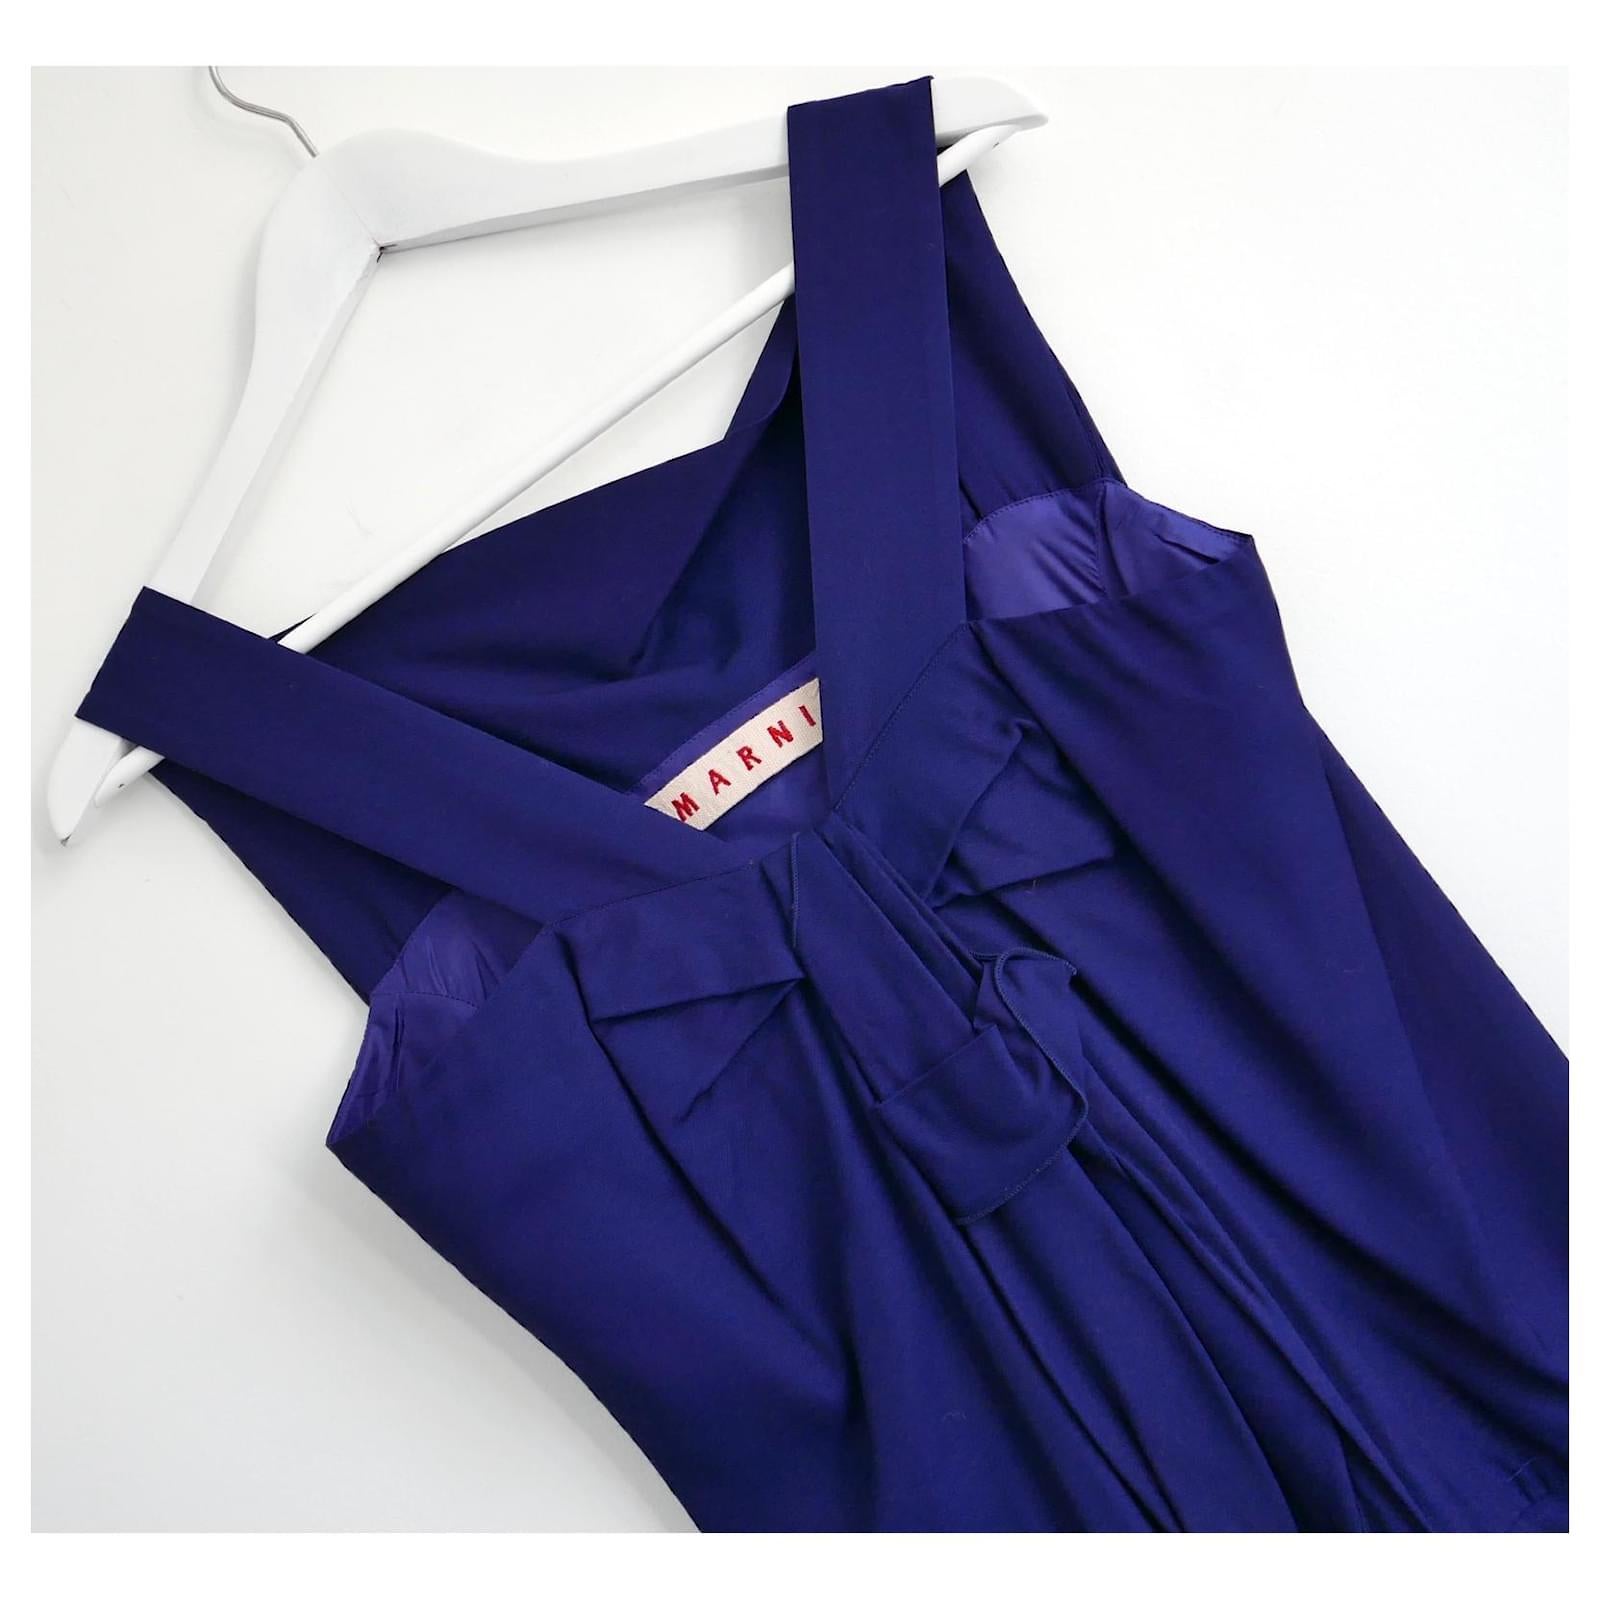 Marni Archival Purple Draped Crepe Dress In Excellent Condition For Sale In London, GB